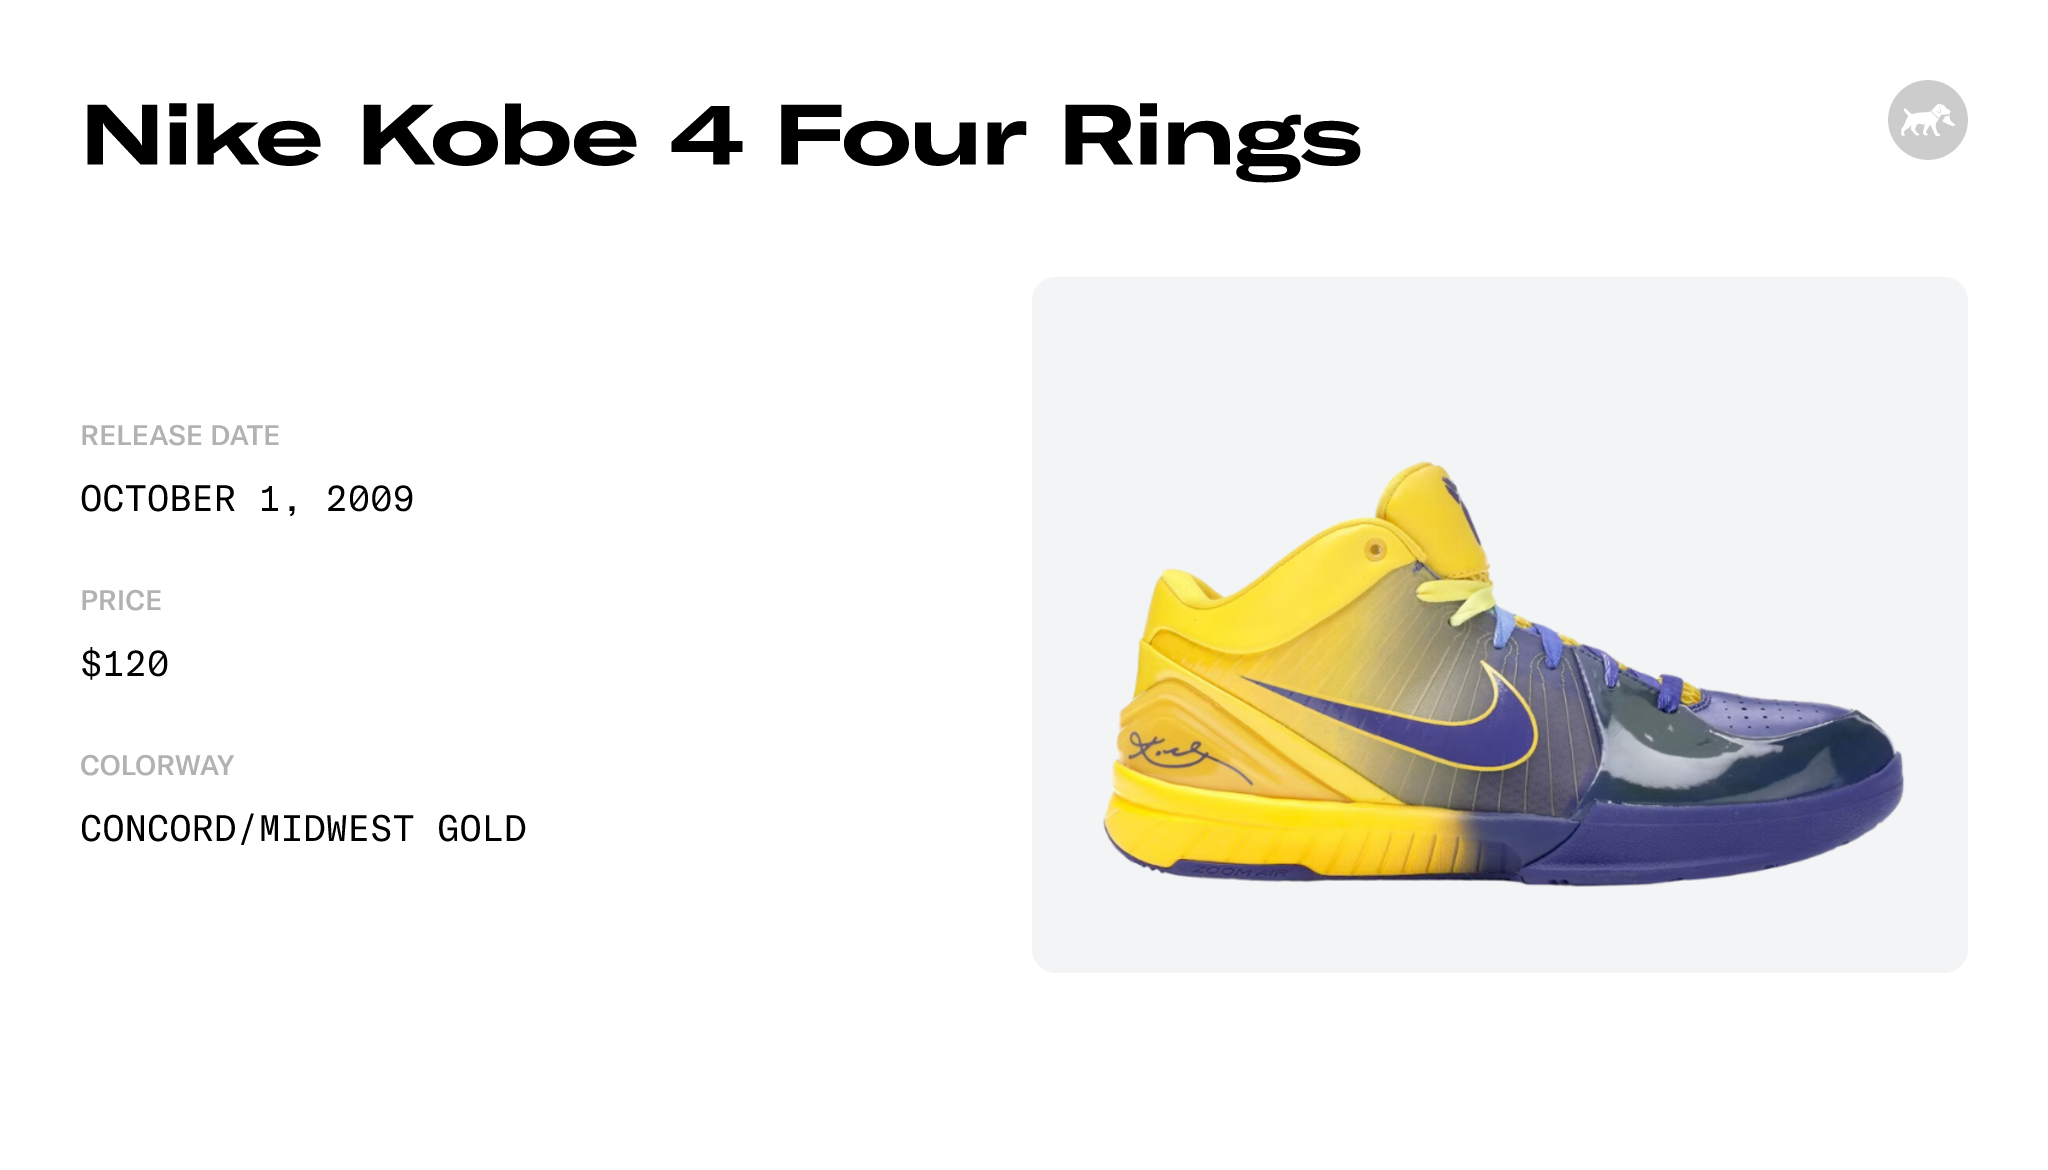 Nike Kobe 4 Four Rings - 344335-400 Raffles and Release Date